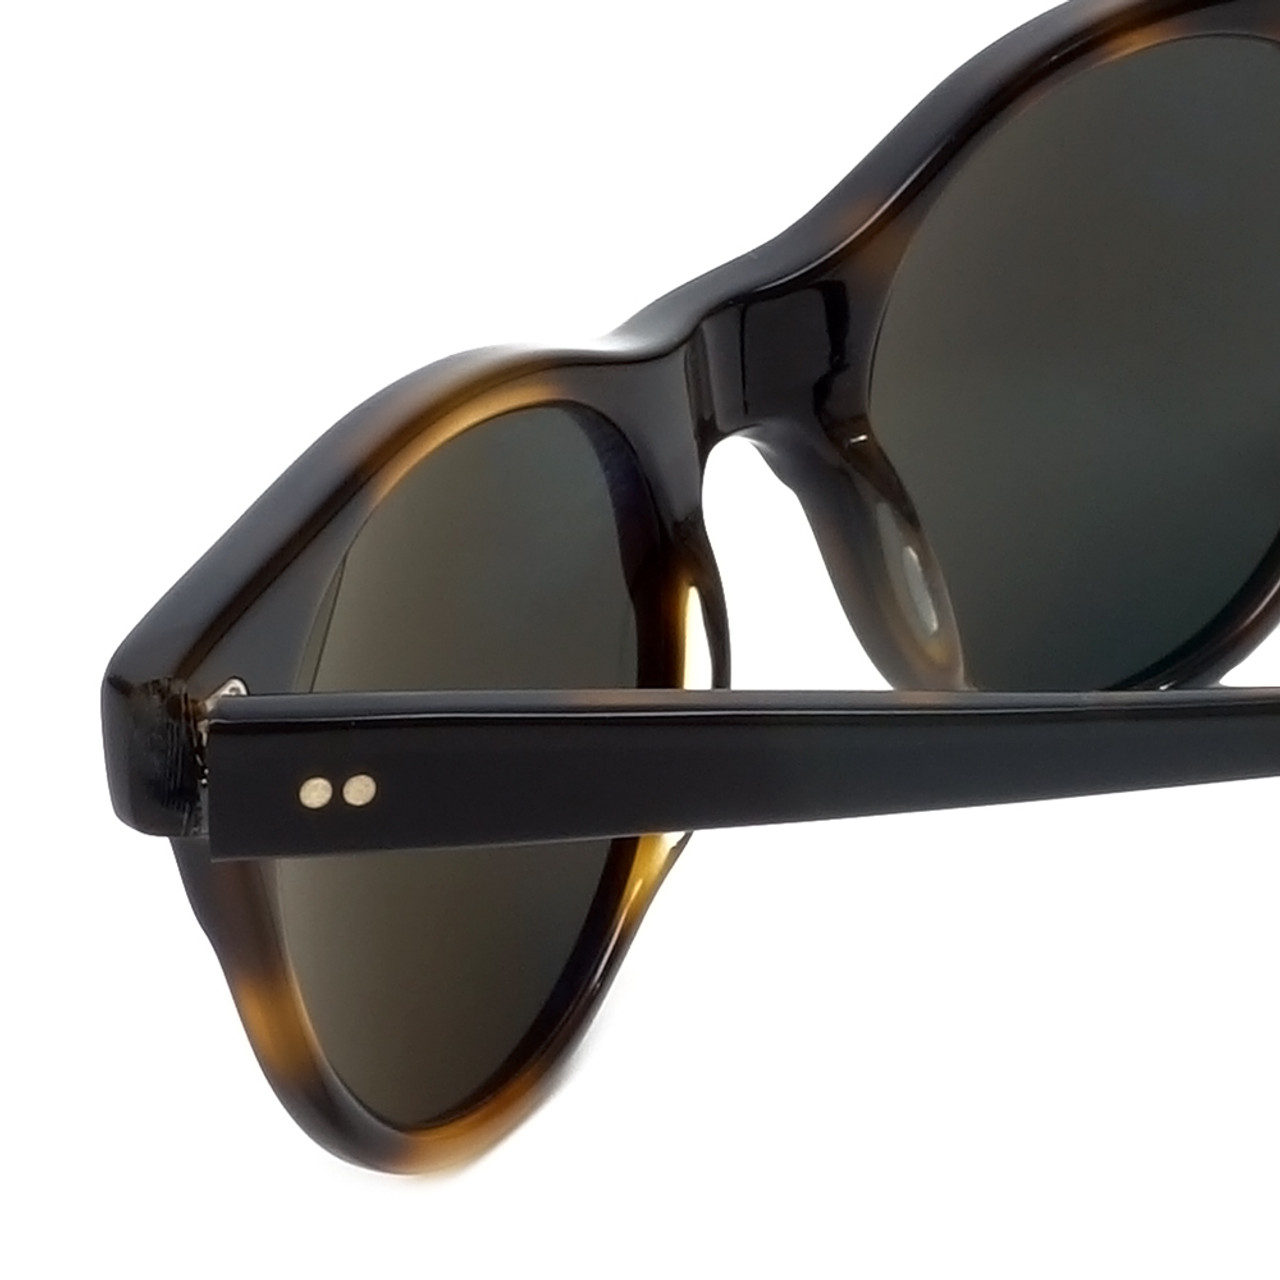 Reptile Designer Polarized Sunglasses Plateau in Black-Tortoise with Flash Mirror Lens